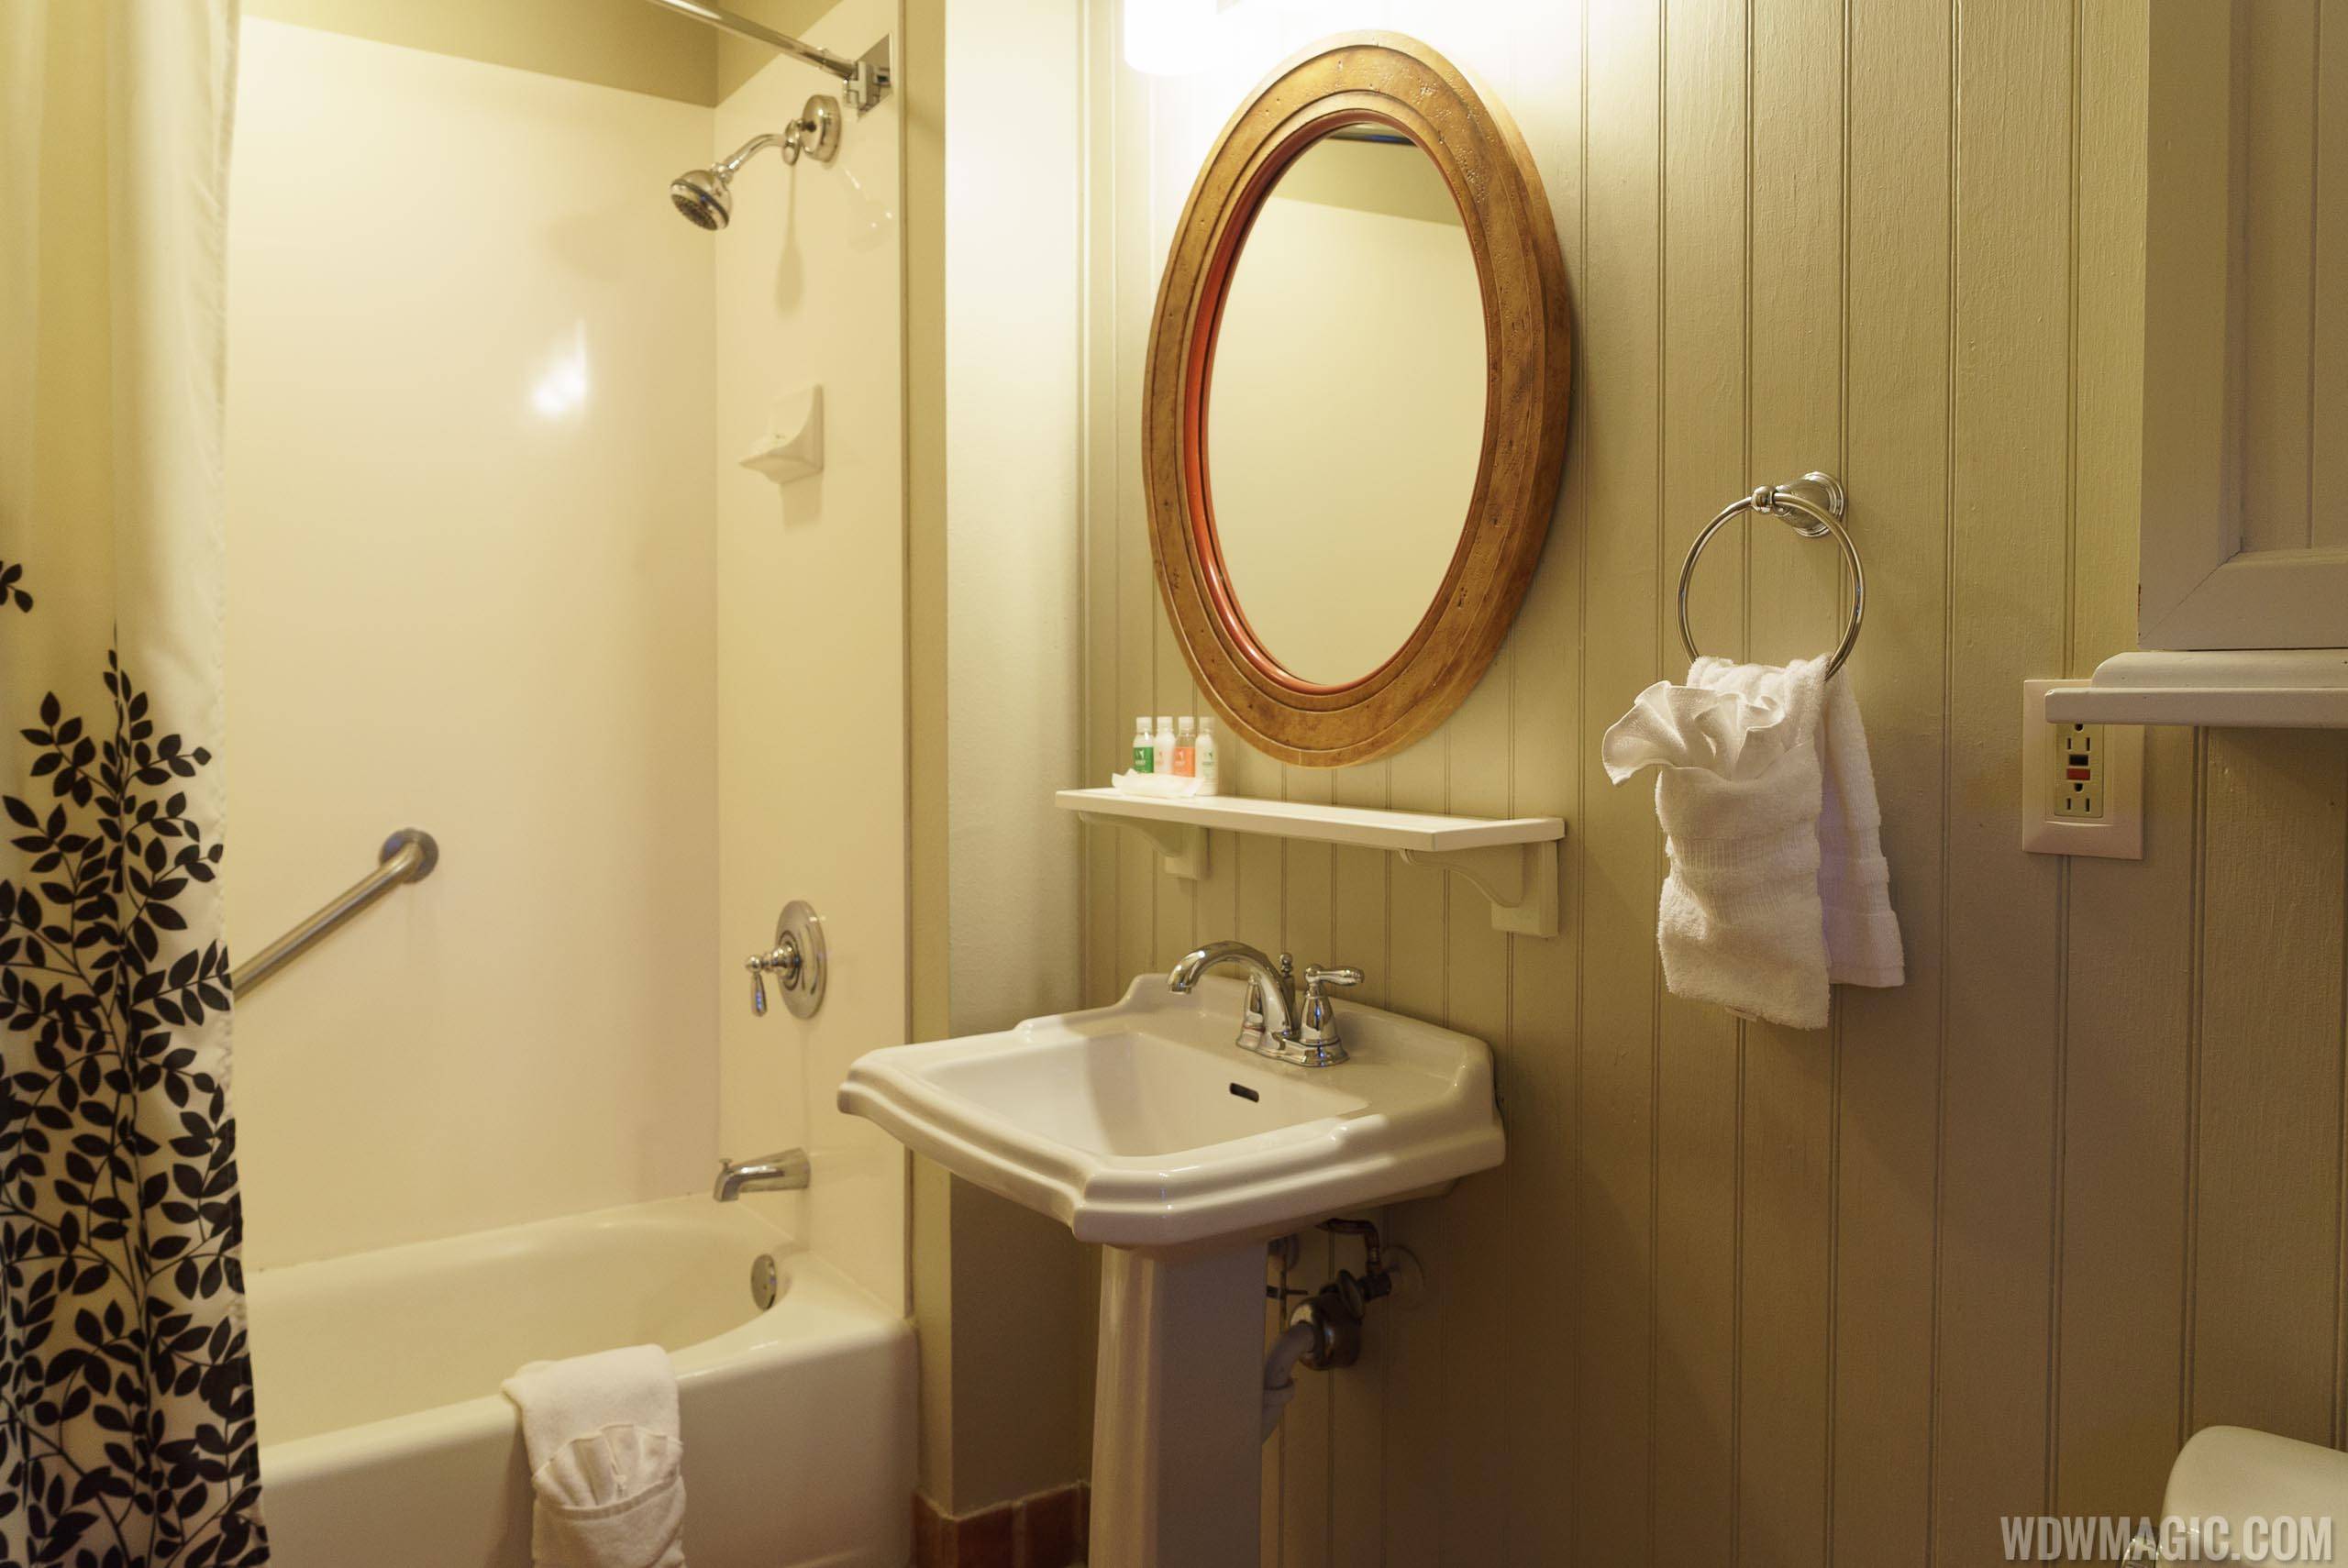 Disney's Hilton Head Island Resort - 2 Bedroom Suite Second Bathroom